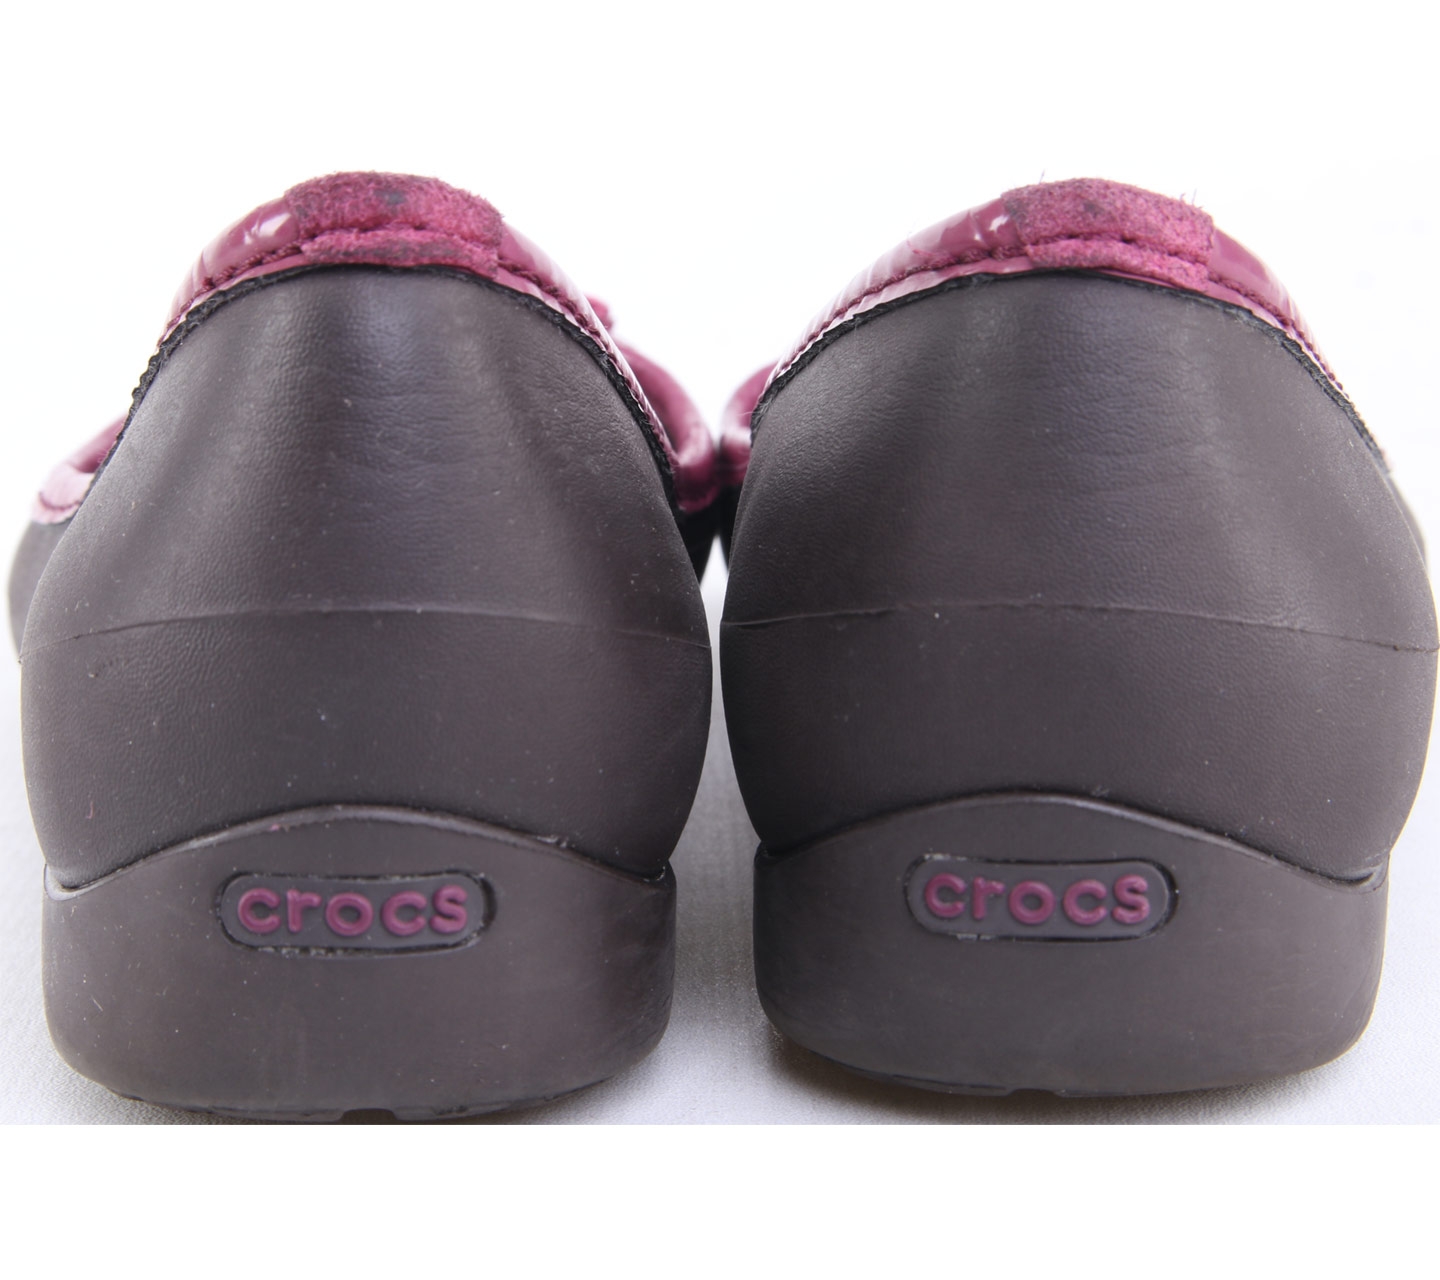 Crocs Brown And Purple Flats